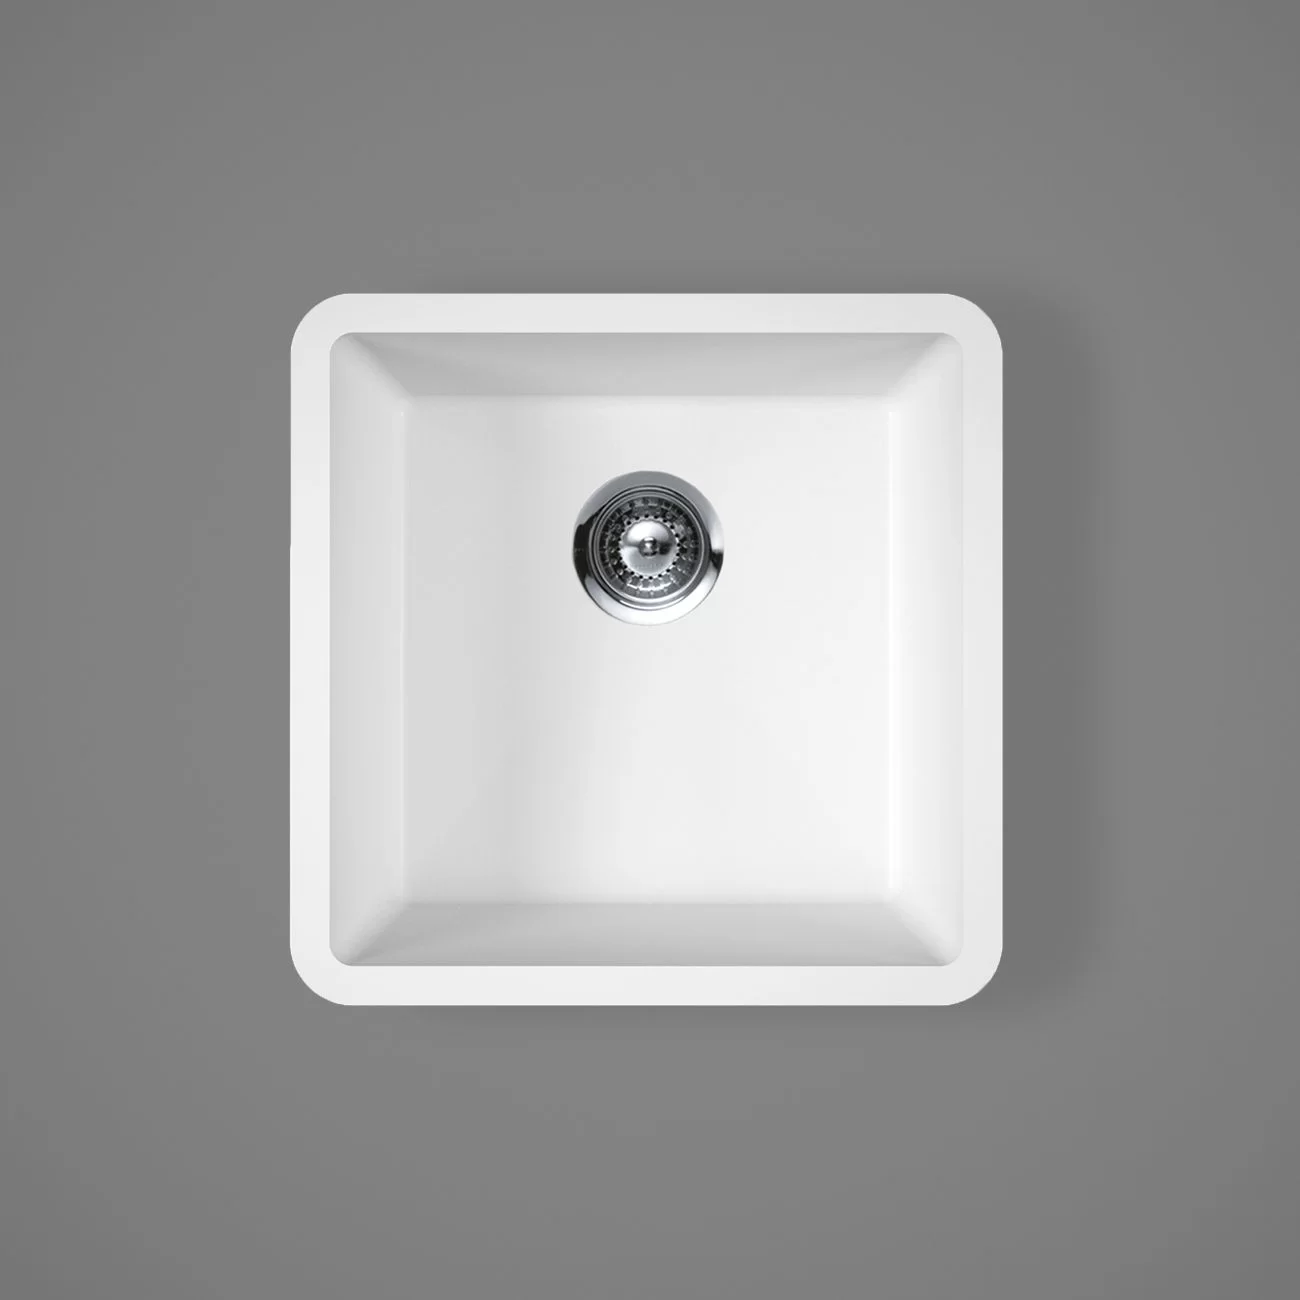 image-Sinks